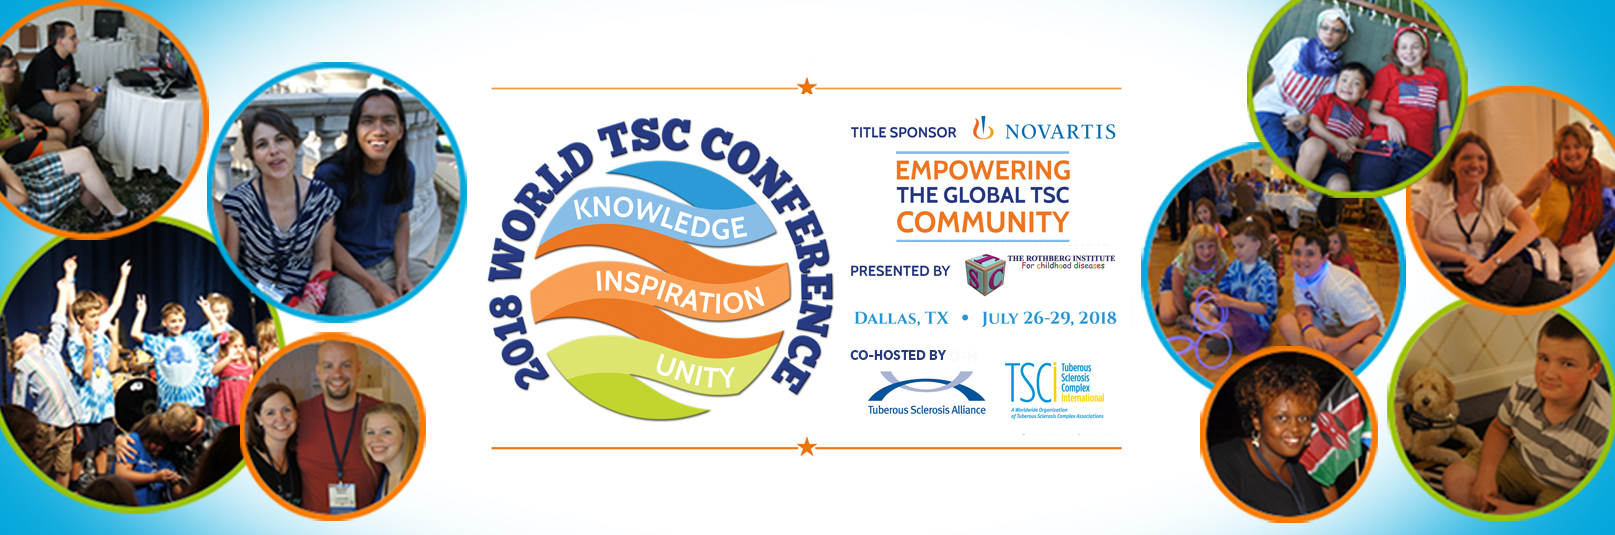 TSC World Conference 2018